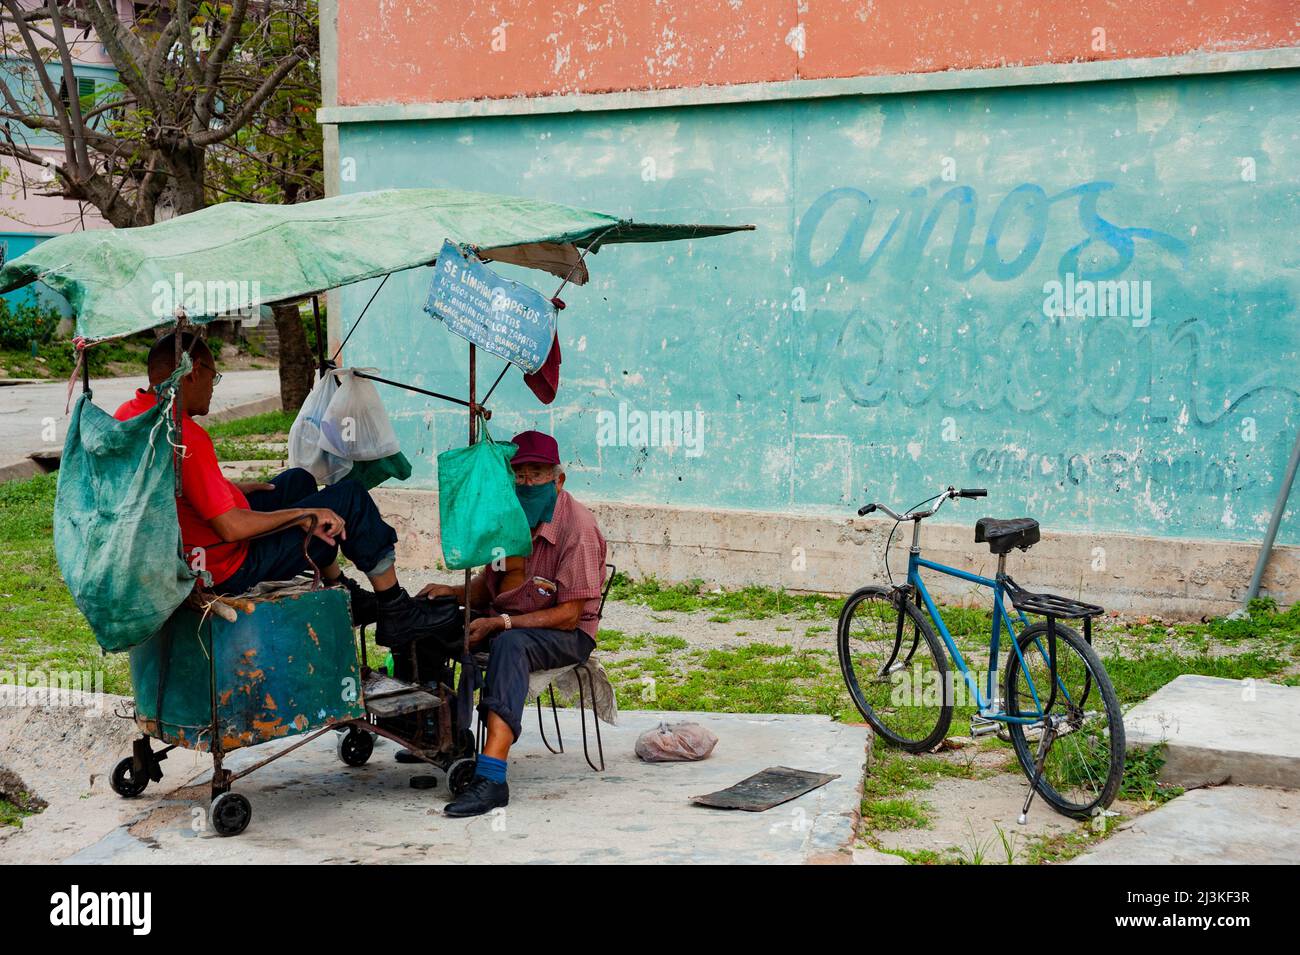 Shoeshine man works on customers boots in Havana, Cuba. Stock Photo